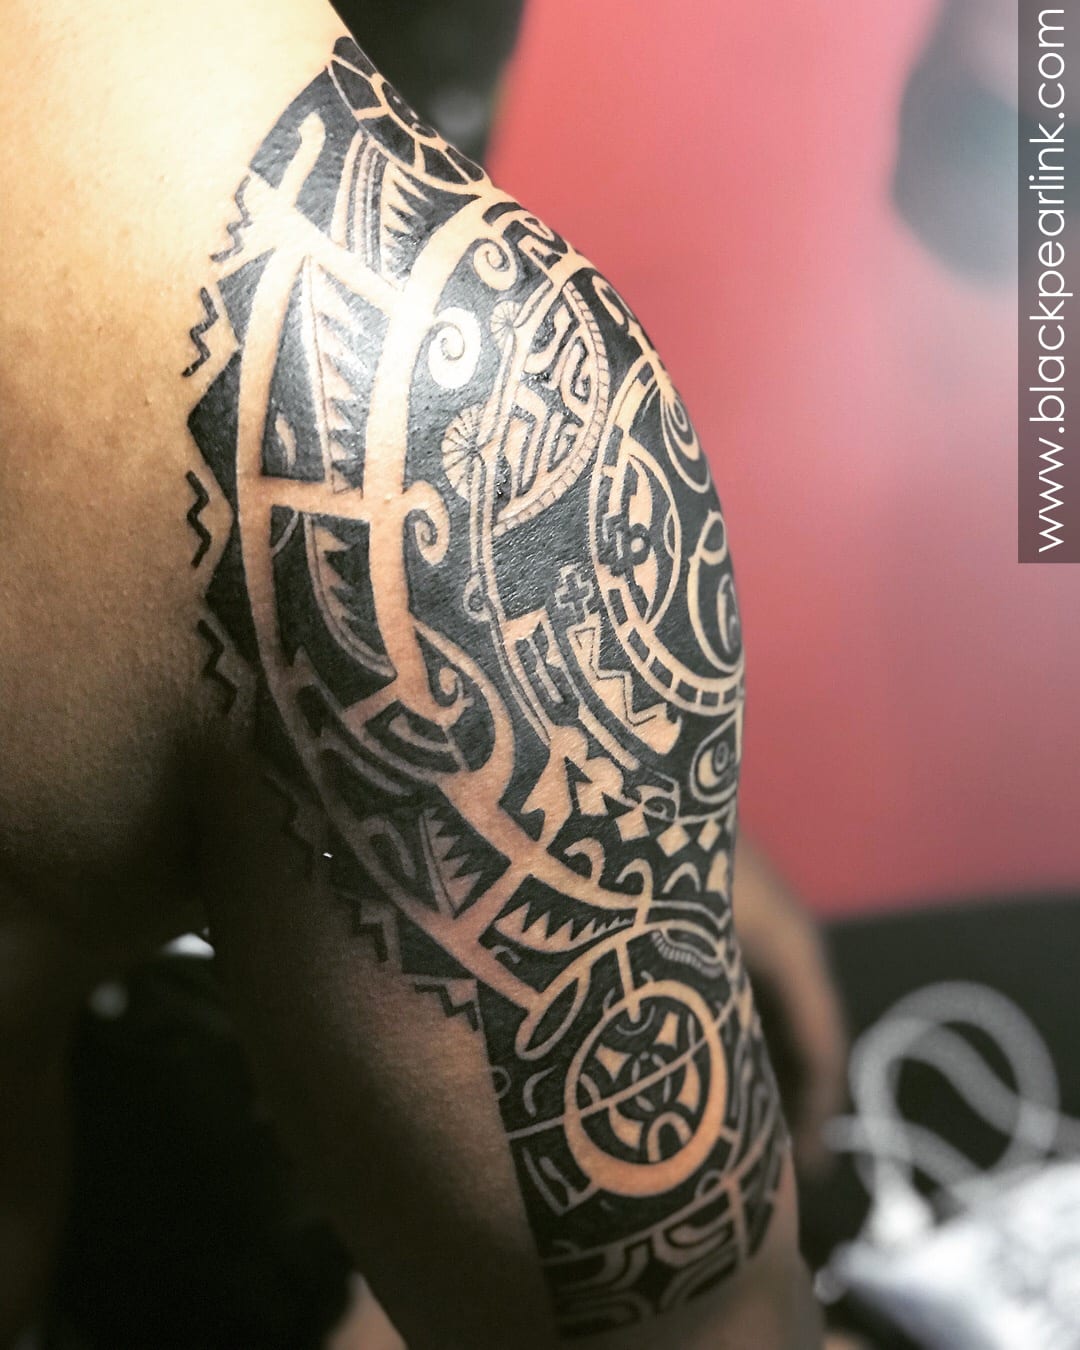 Dwayne Johnson “The Rock” Tattoos - Memory Lane Tattoo Studio Singapore -  World Famous Apple Qu Female Artist